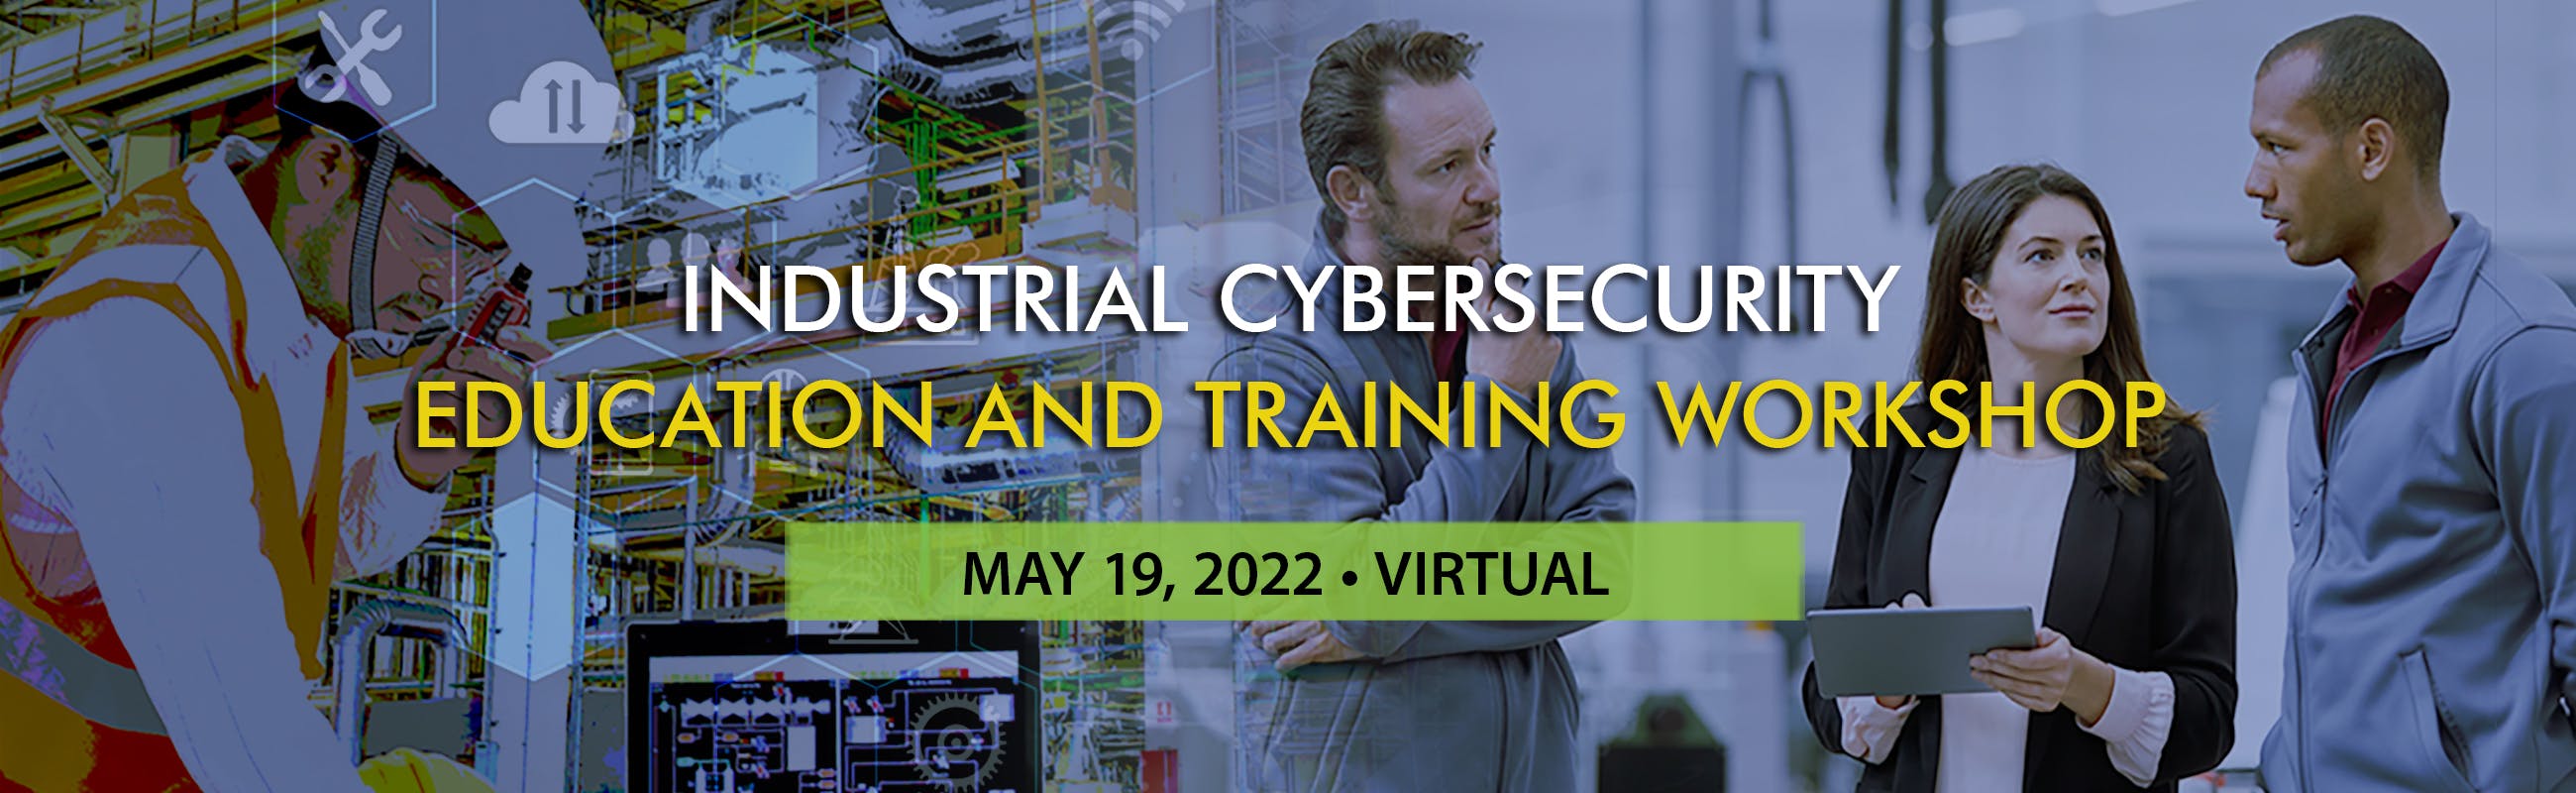 Industrial Cybersecurity workshop